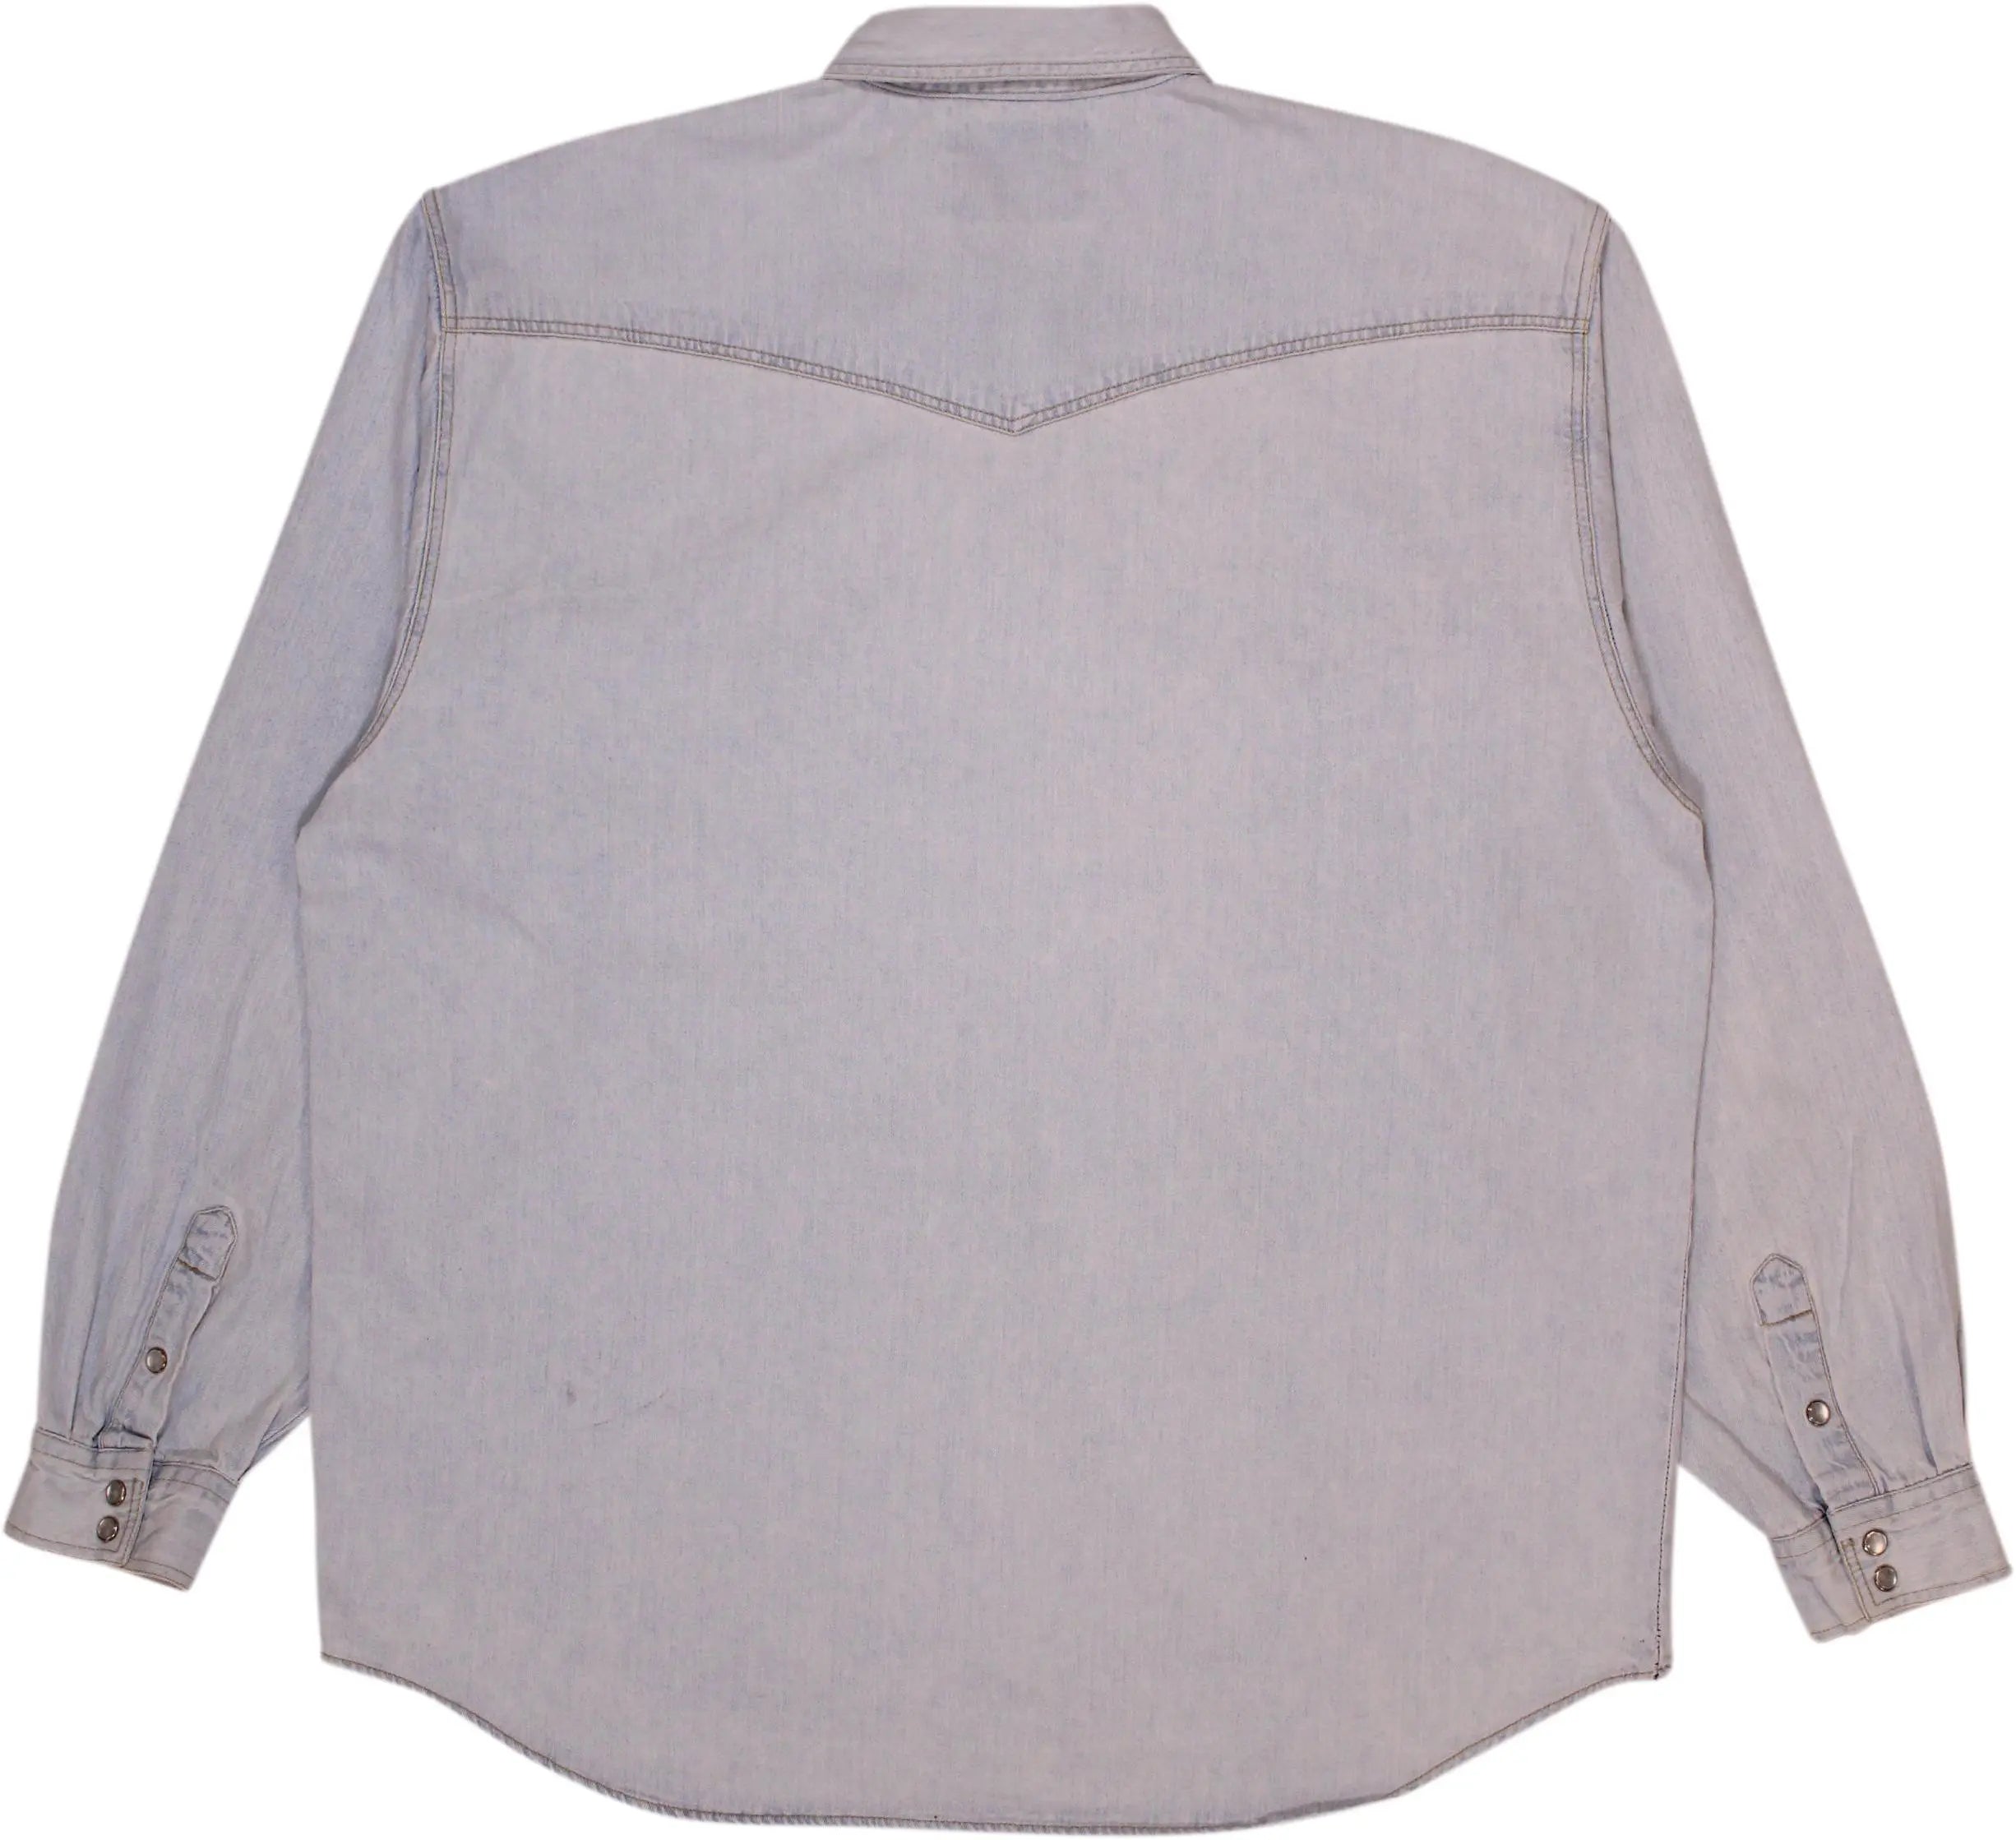 Wrangler - Wrangler Denim Shirt- ThriftTale.com - Vintage and second handclothing